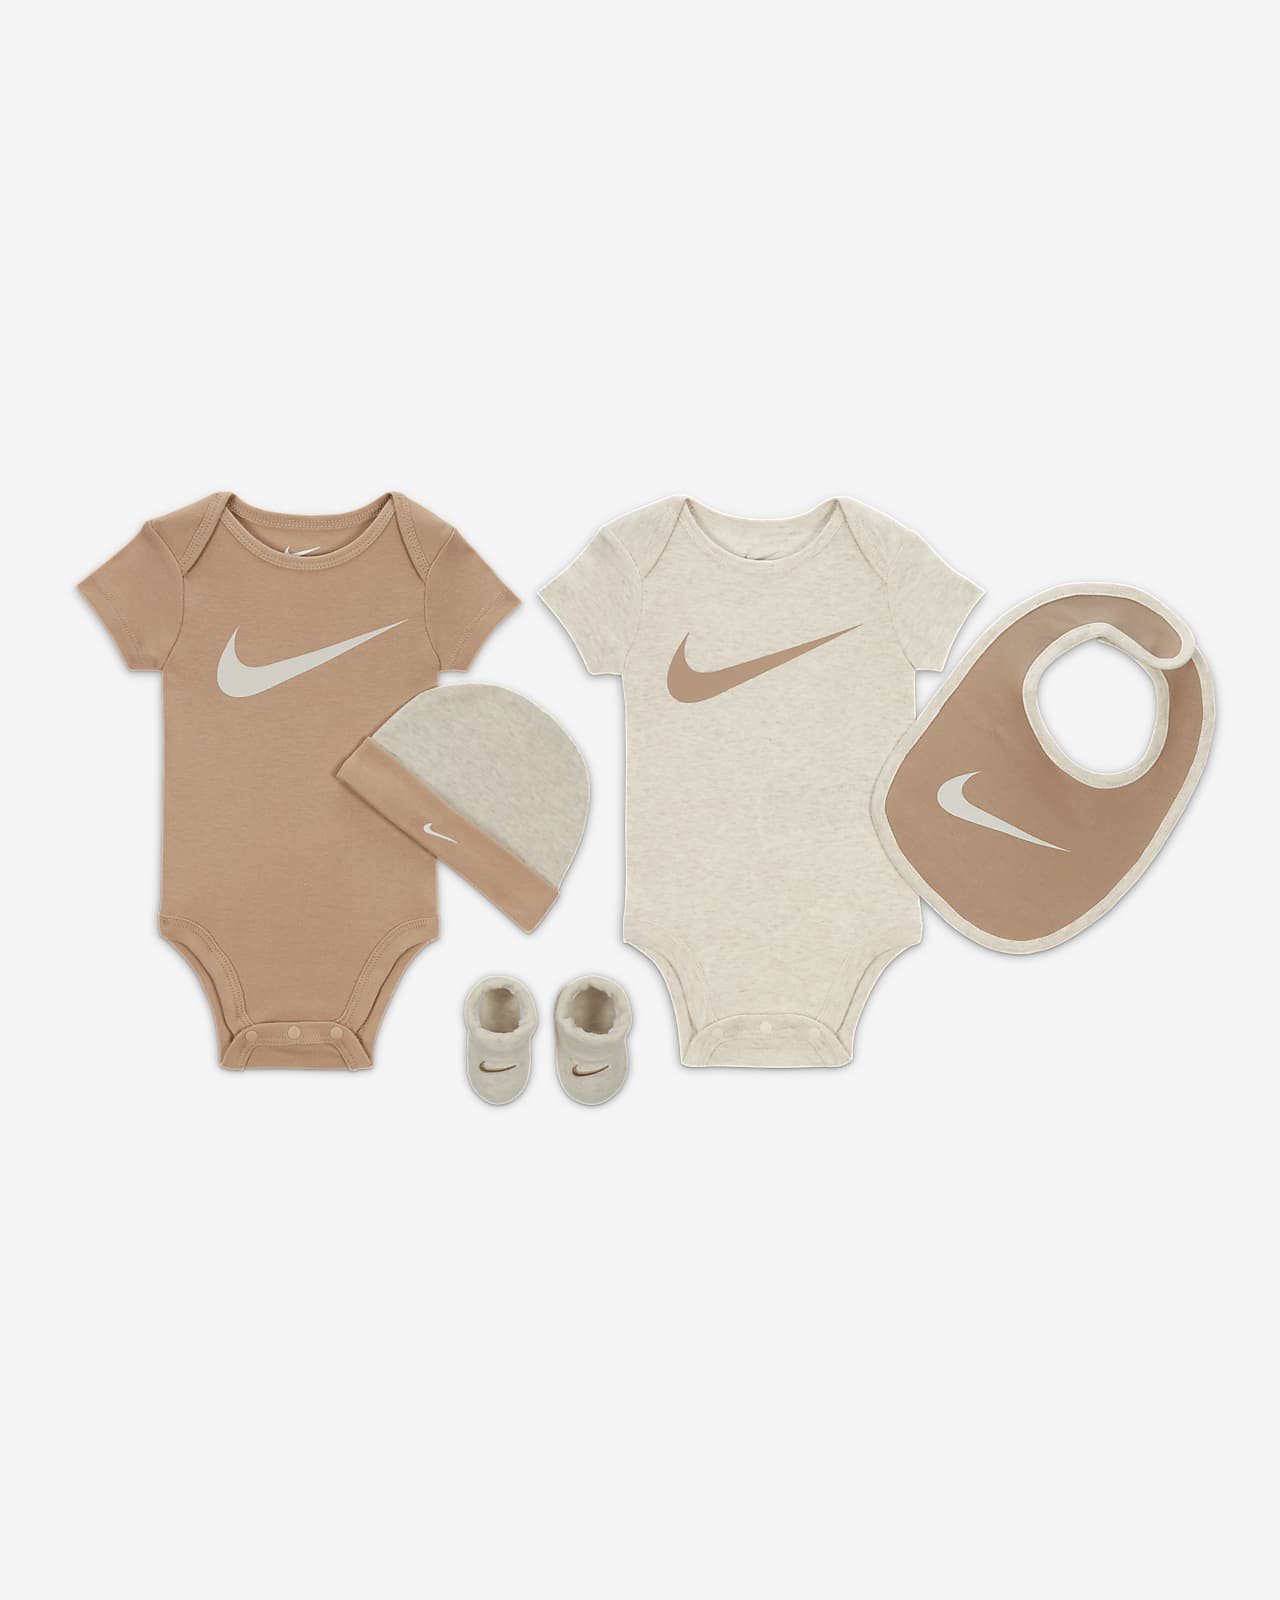 Nike 5-Piece Gift Set Baby 5-Piece Boxed Gift Set.